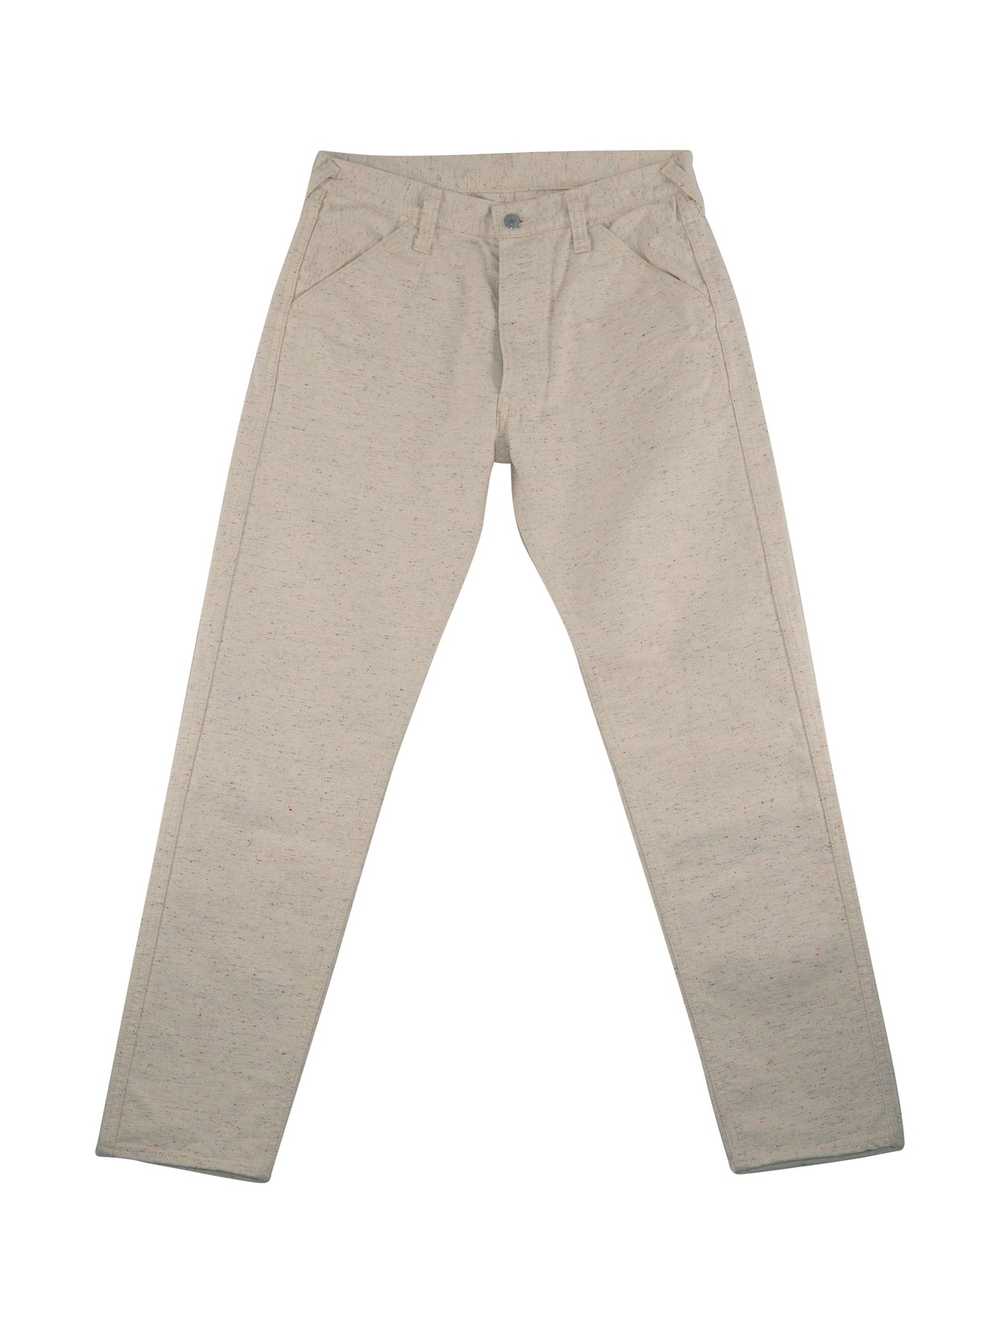 Evisu Multicolor Tweed White Denim Jeans Pants - image 4